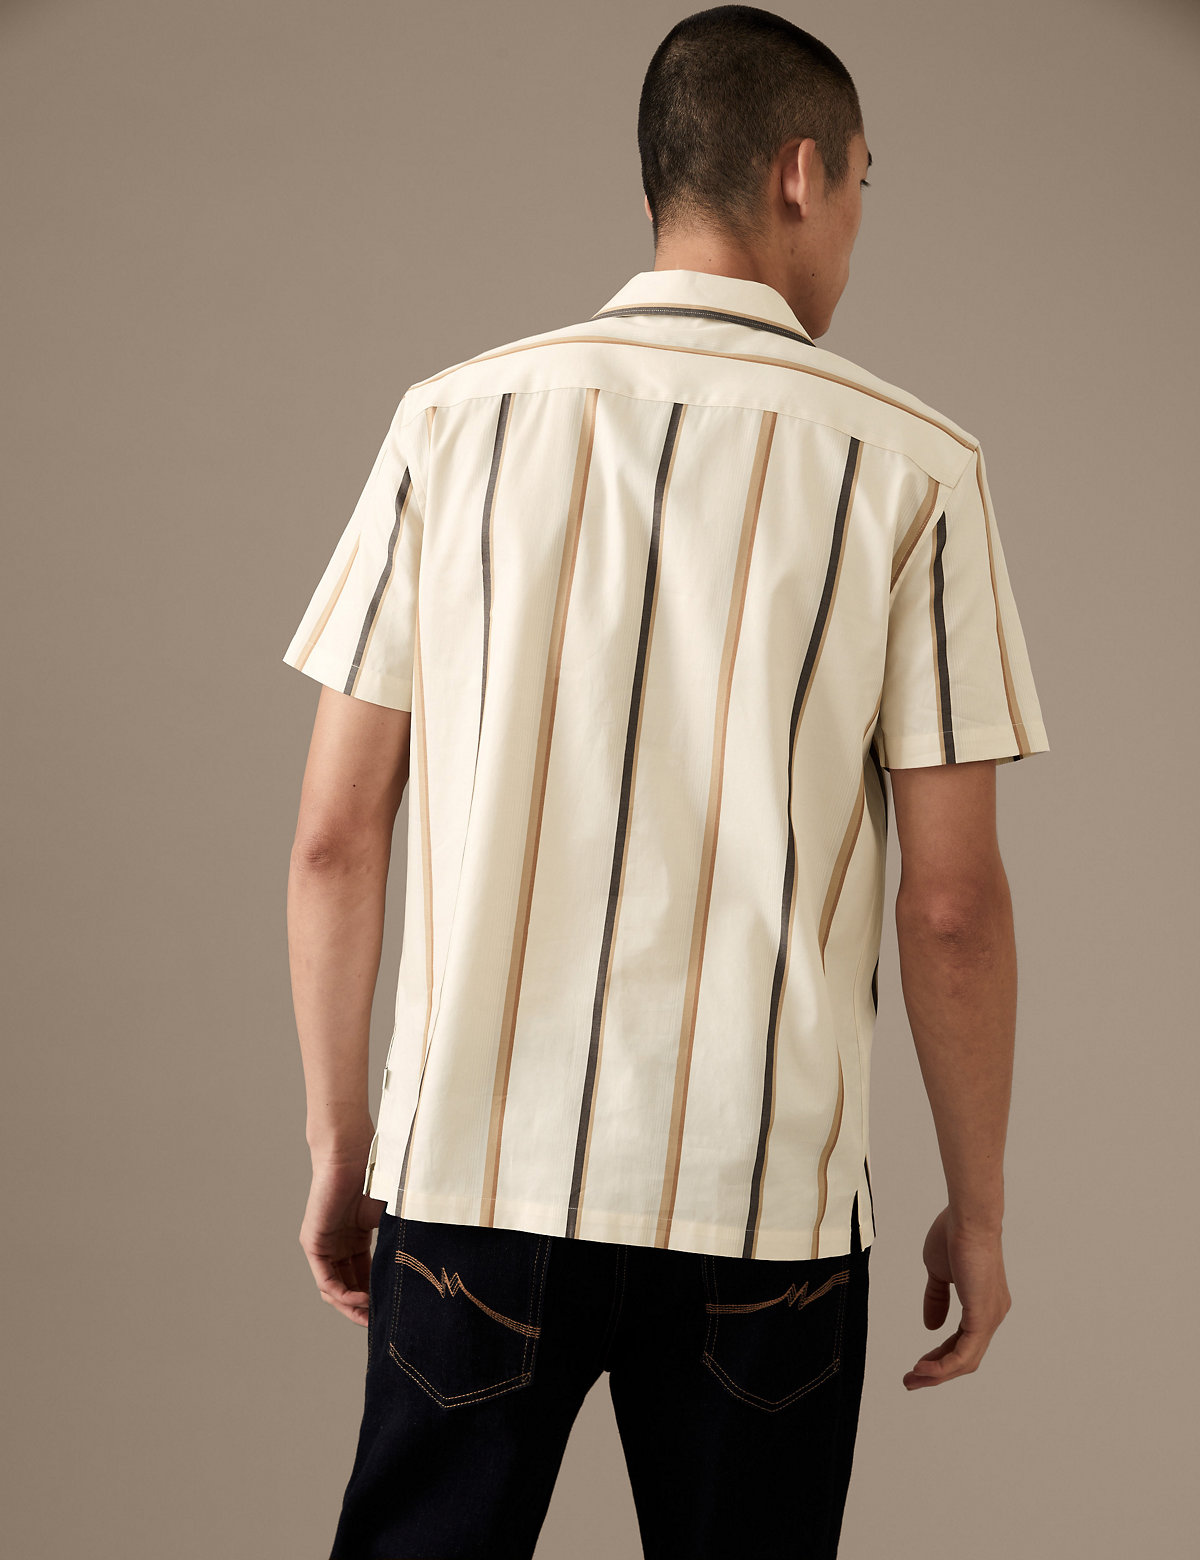 Pure Cotton Striped Shirt